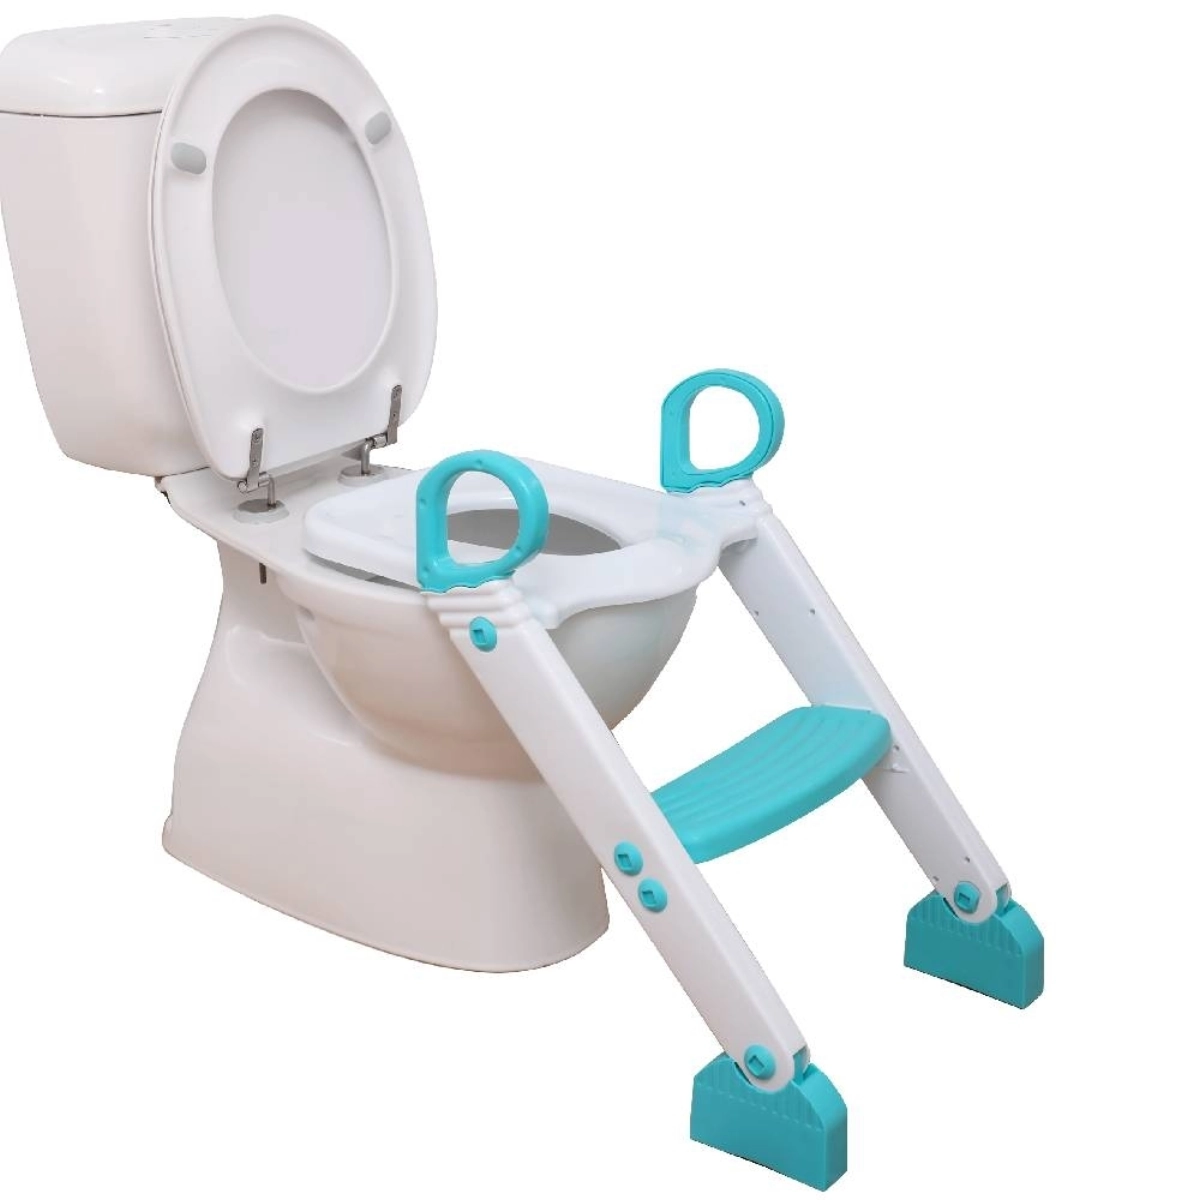 Image of Dreambaby Step-up Toilet Trainer-Aqua/White (2021)